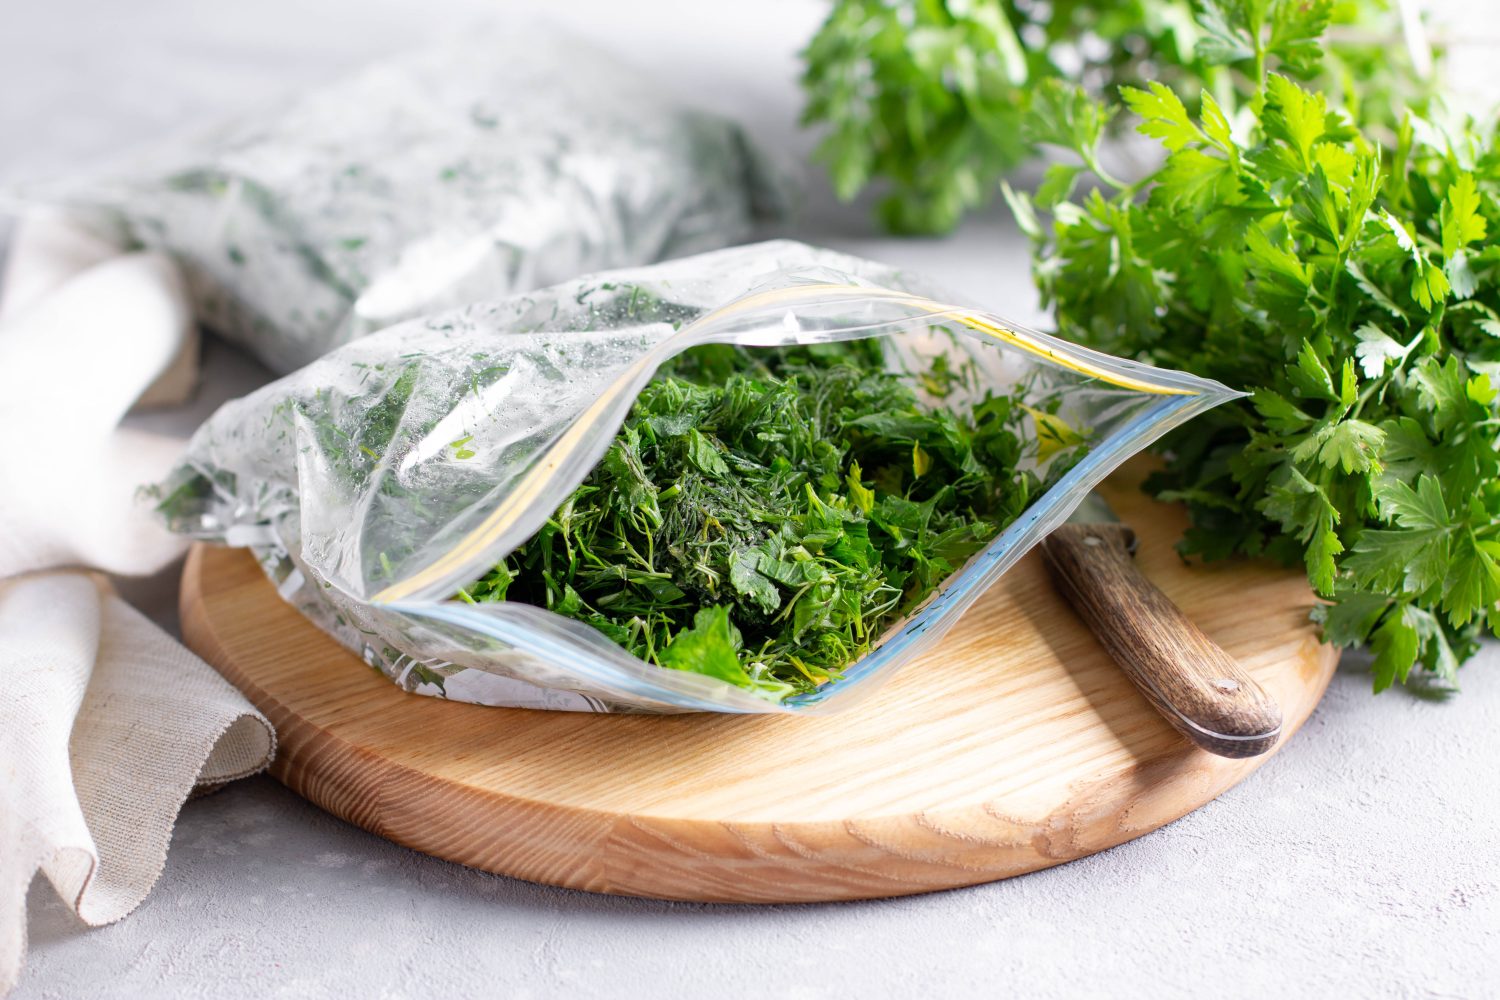 Frozen parsley in a plastic bag. Frozen vegetables. Concept of healthy eating.